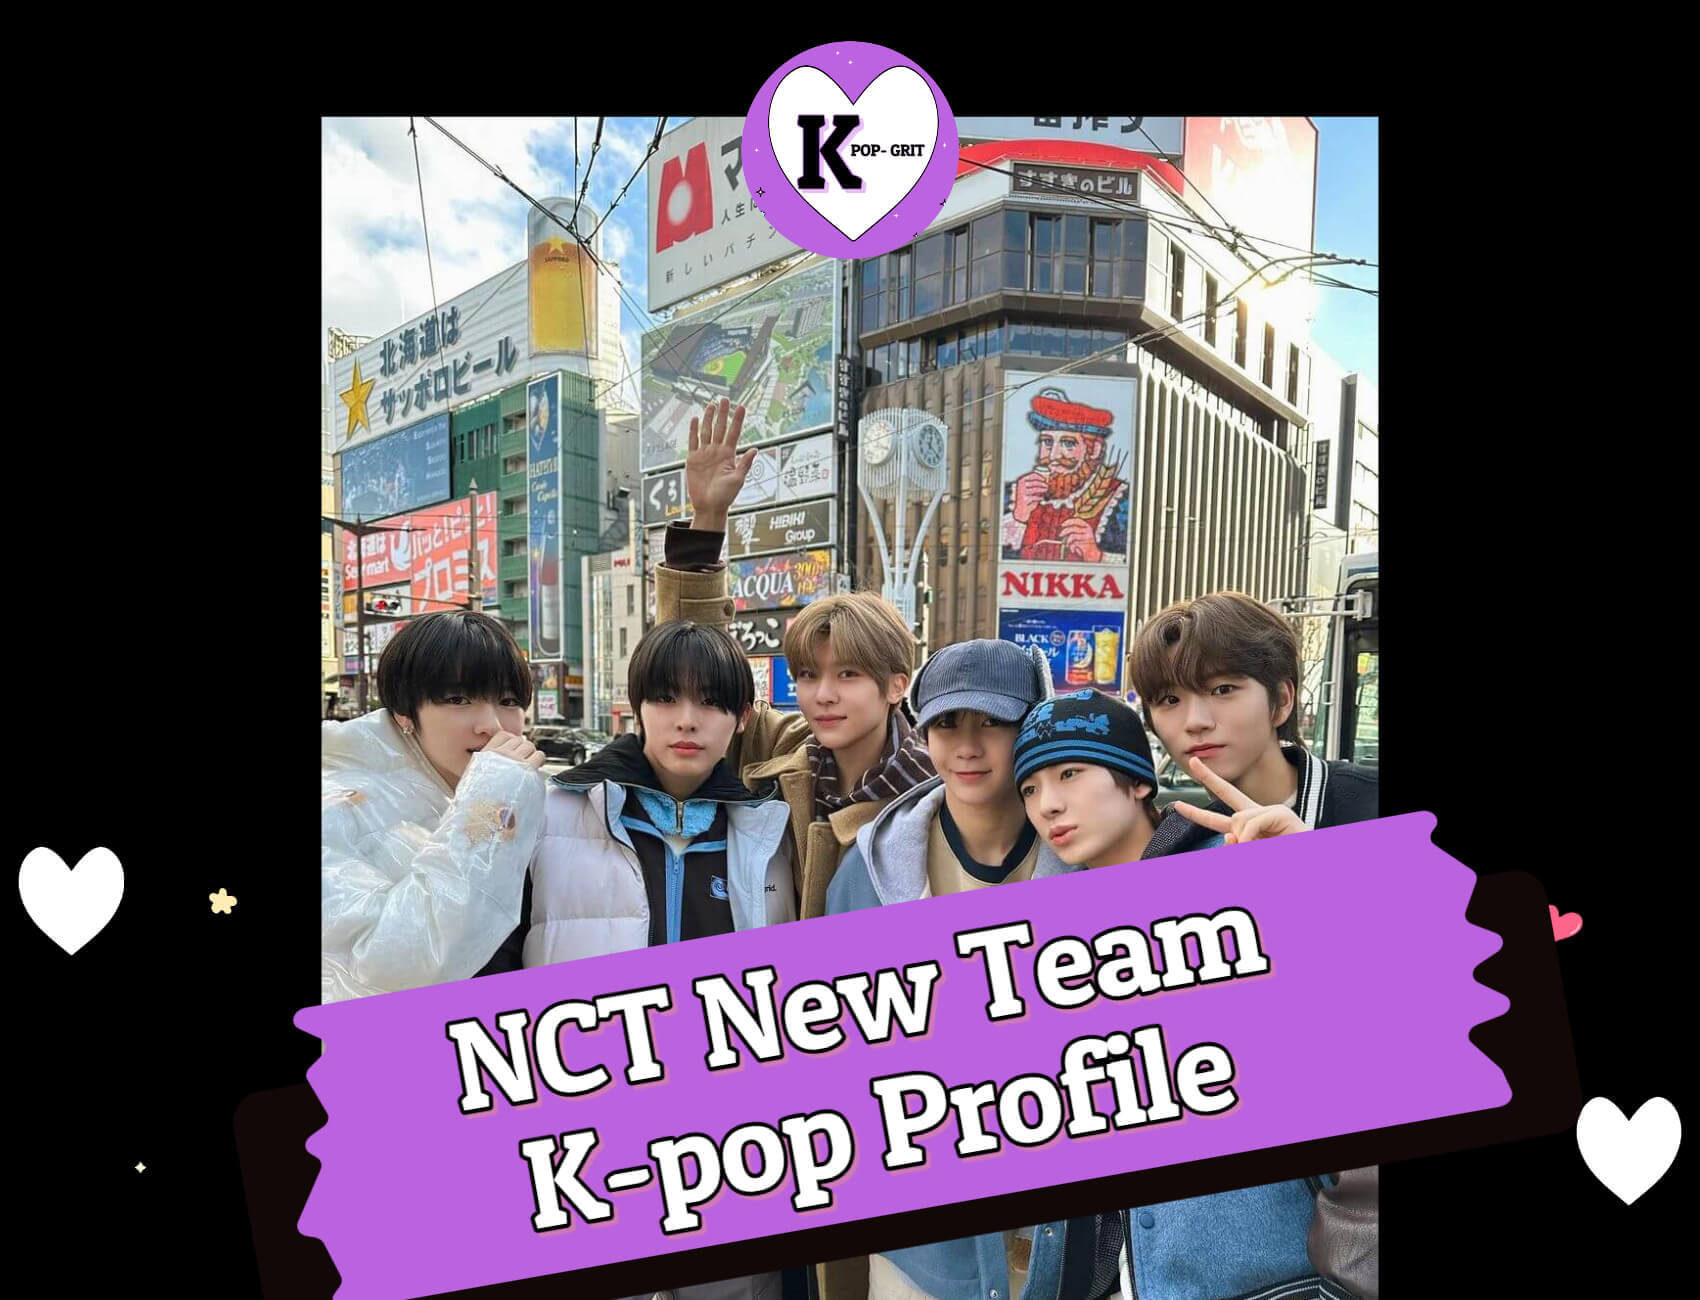 NCT New Team Kpop Profile